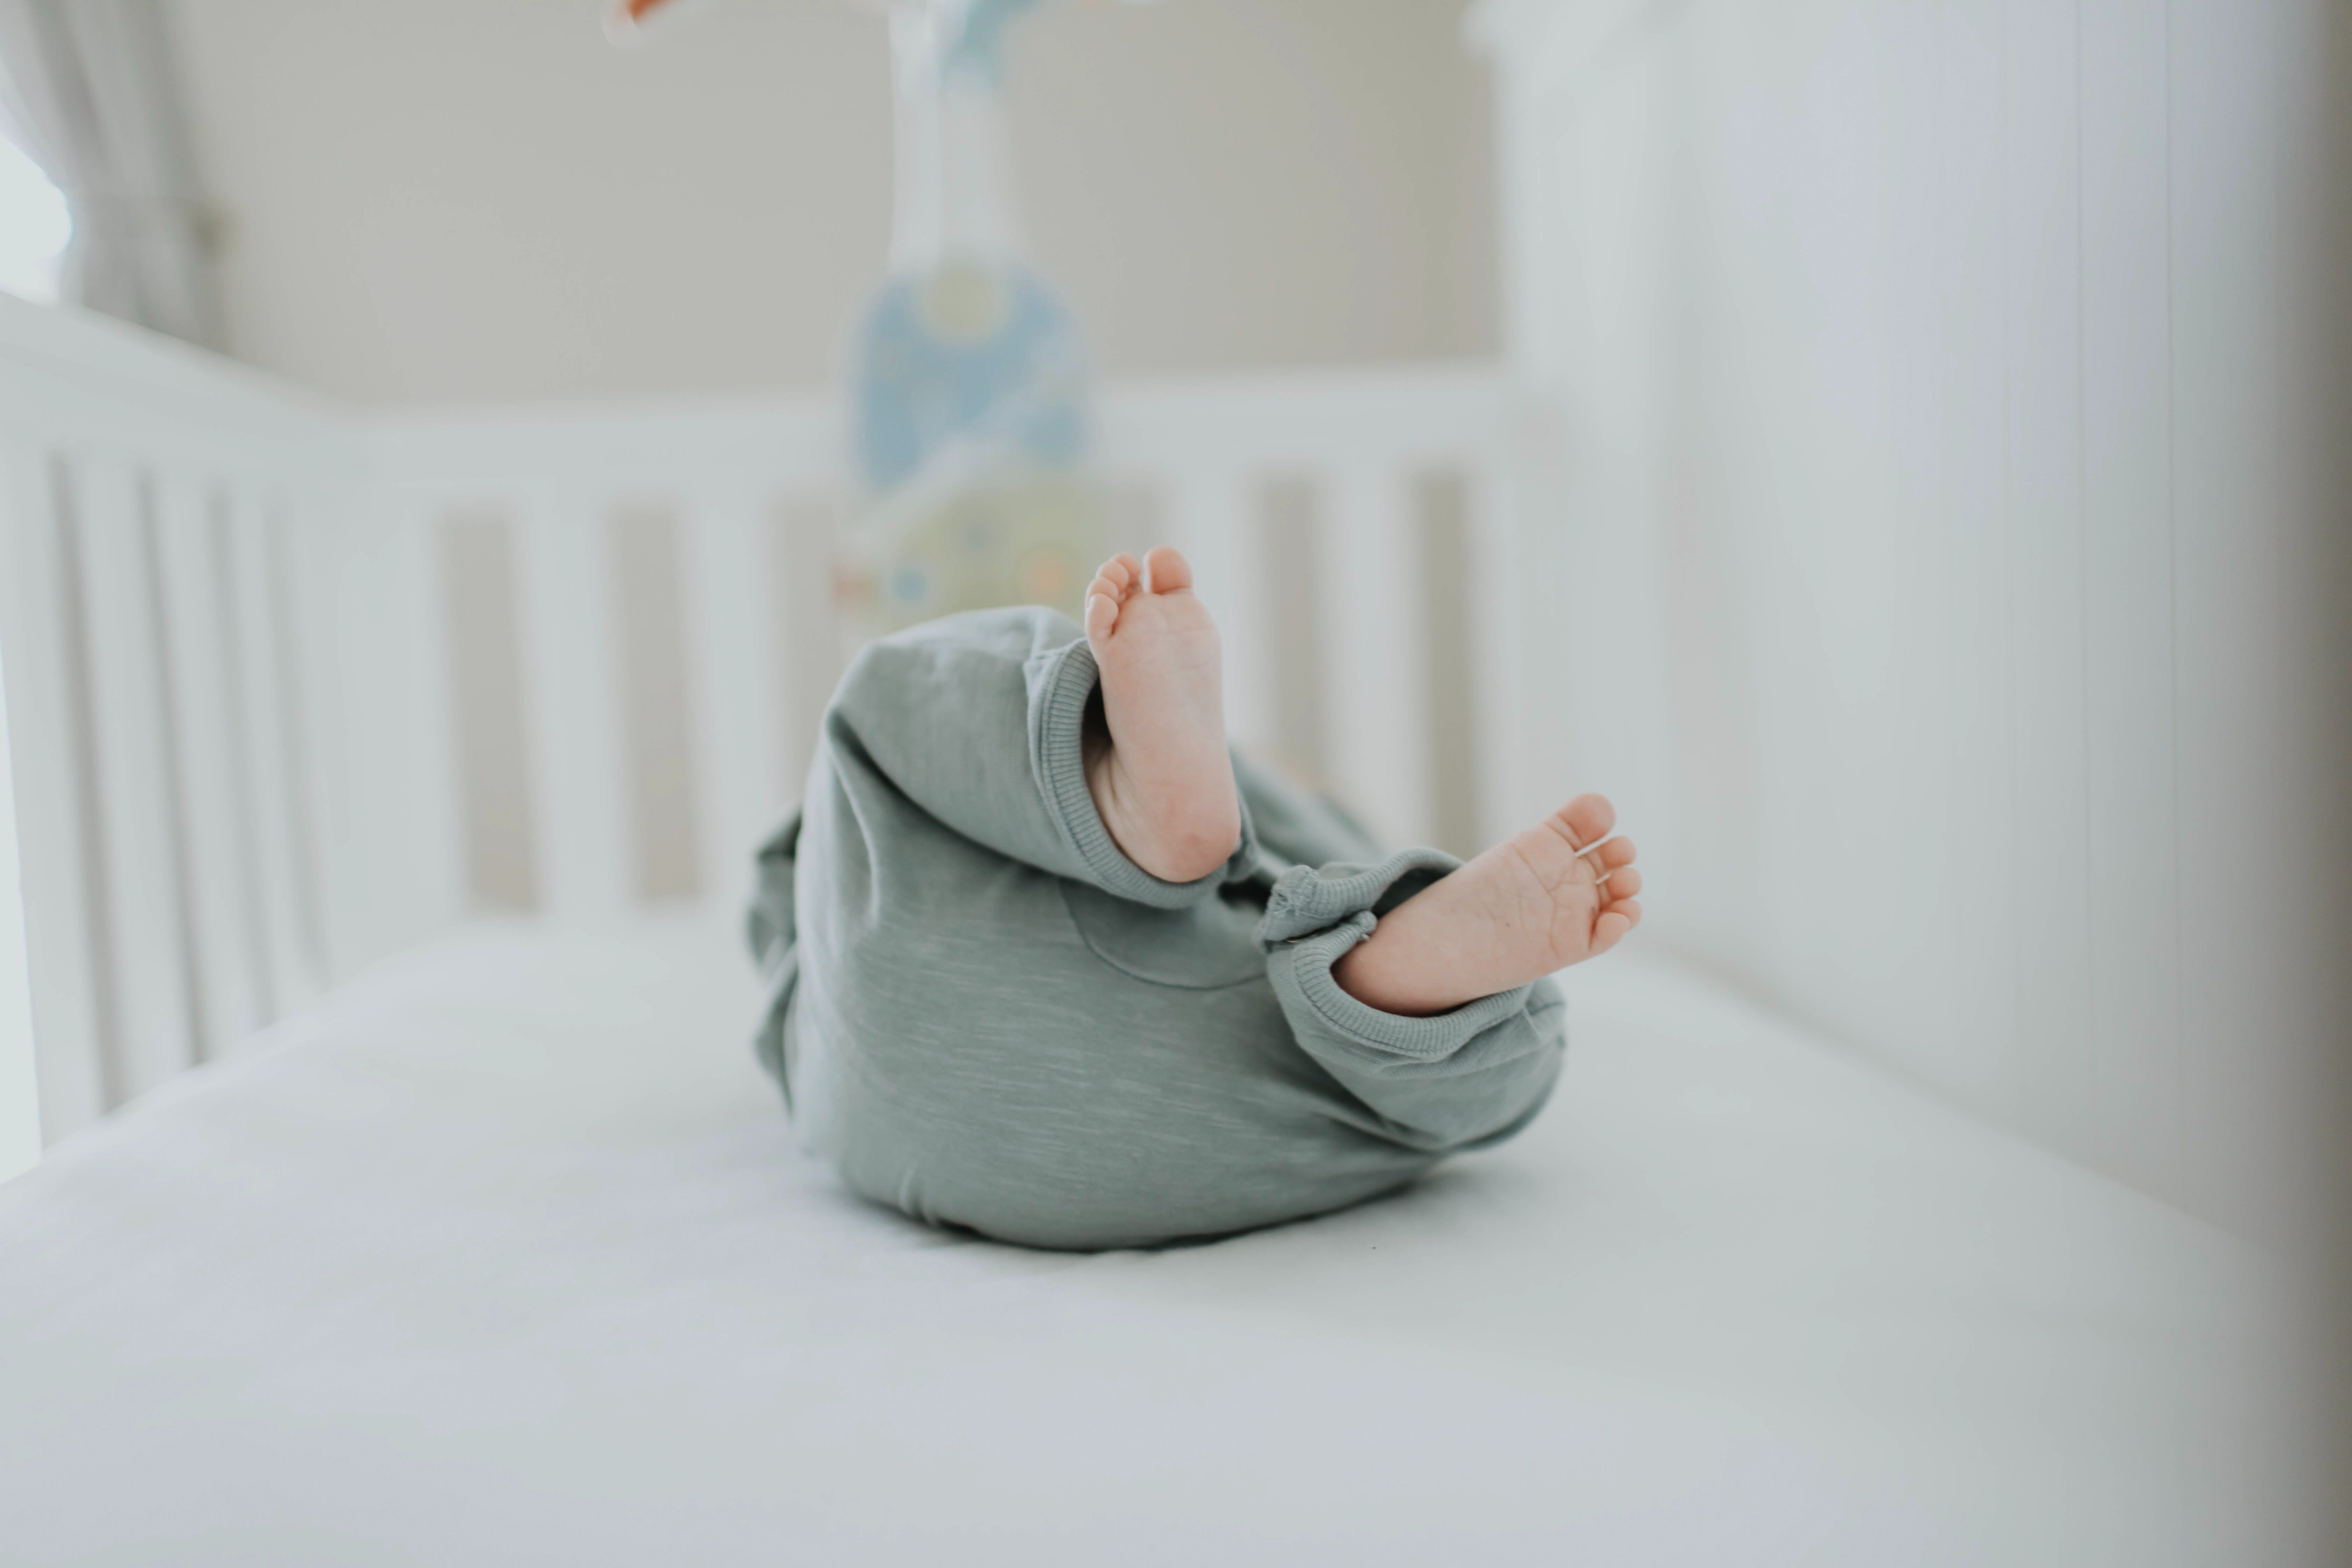 Newborn babies can be restless sleepers